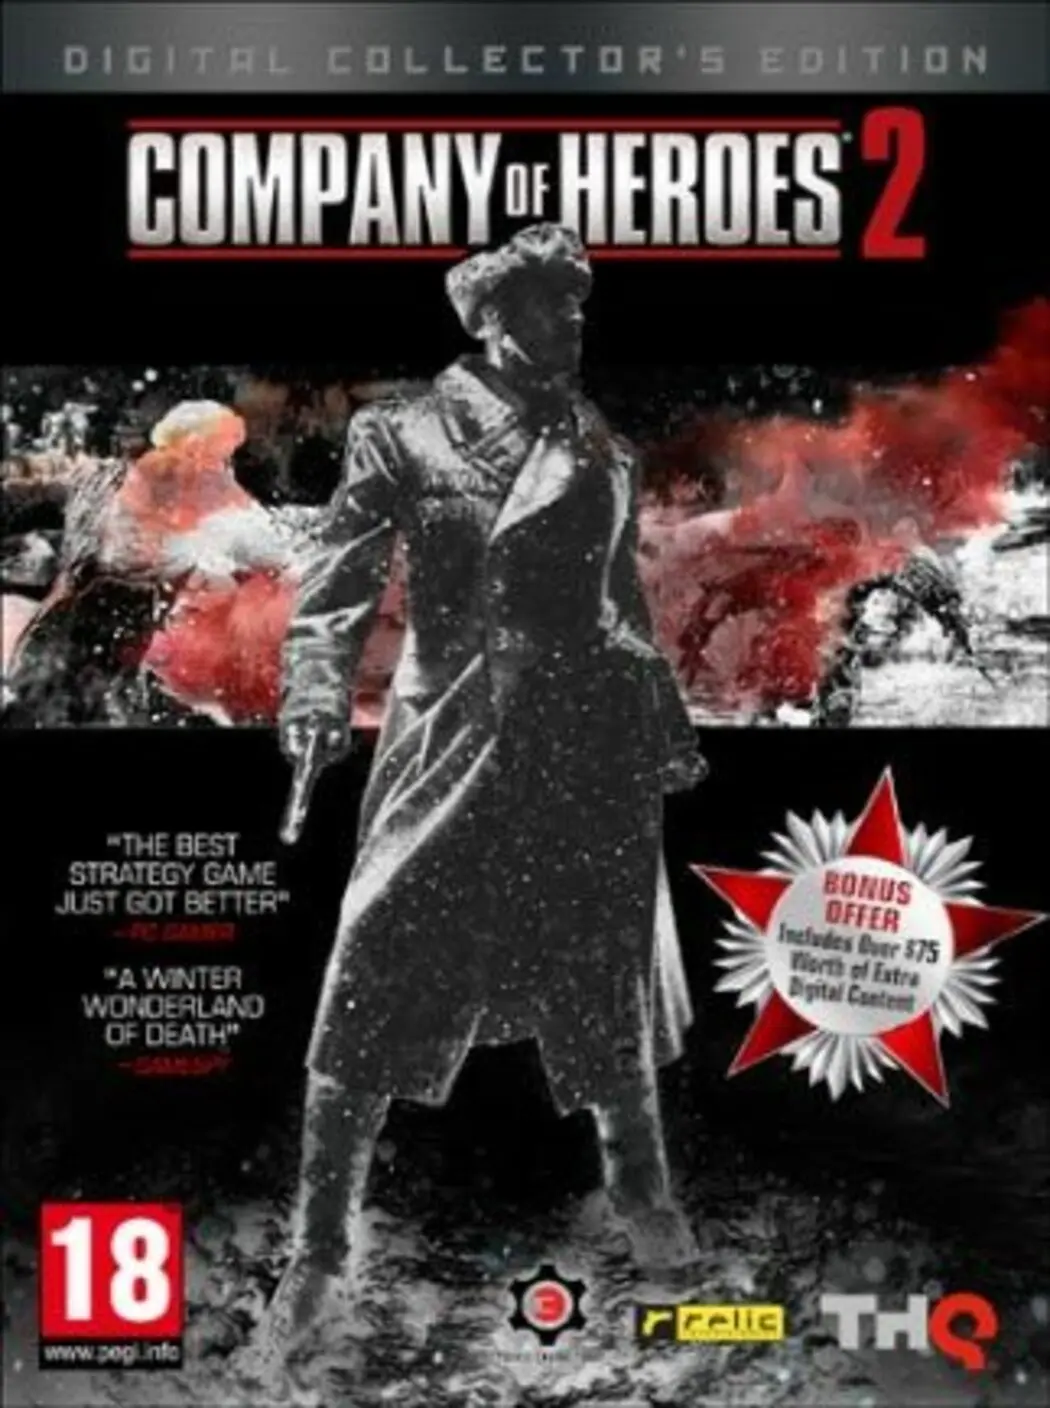 Company of Heroes 2 Digital Collectors Edition (PC) - Steam - Digital Code